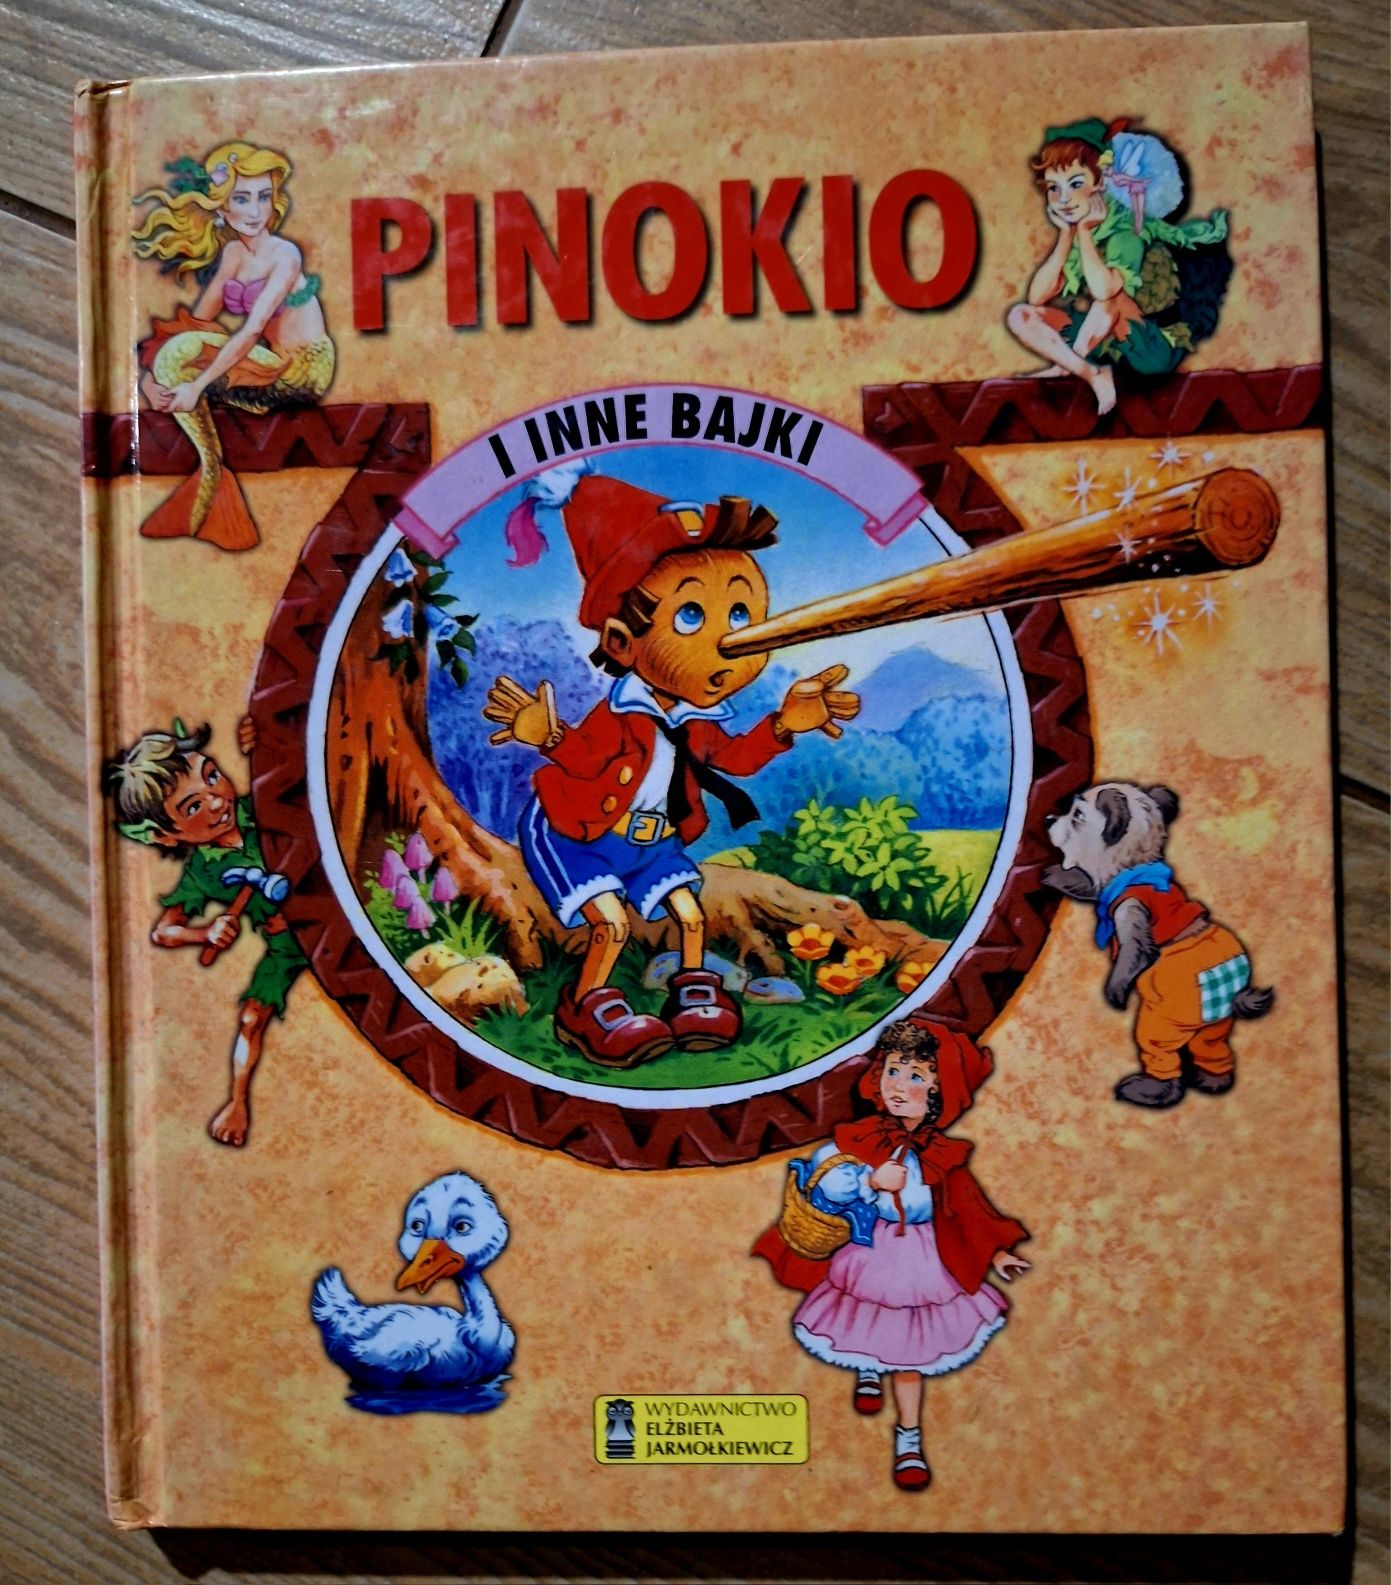 Pinokio i inne bajki